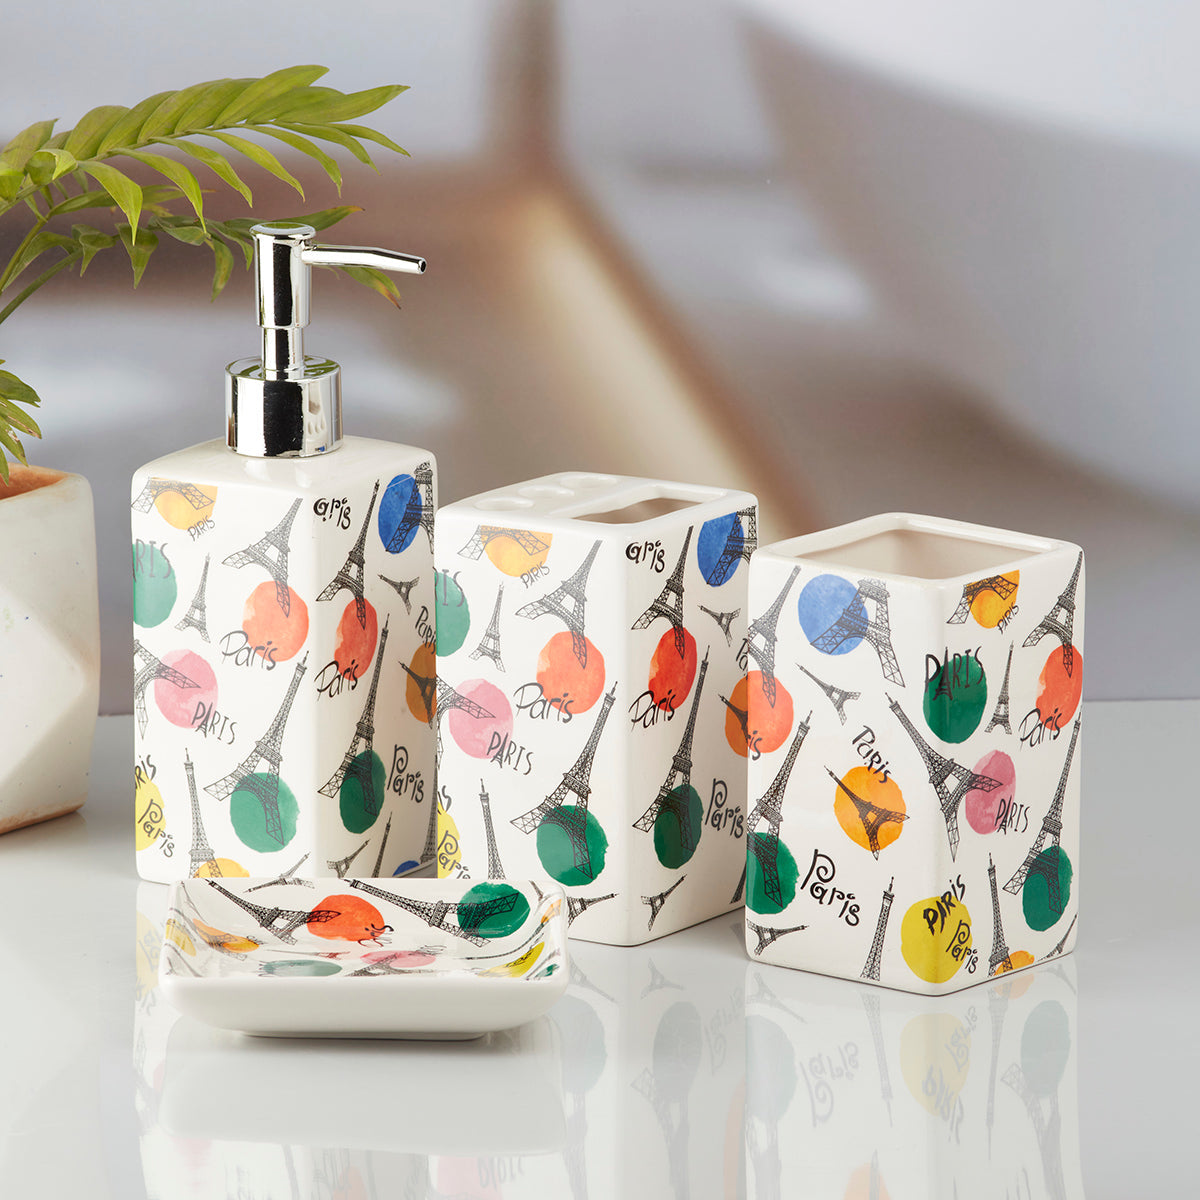 Ceramic Bathroom Accessories Set of 4 Bath Set with Soap Dispenser (10191)